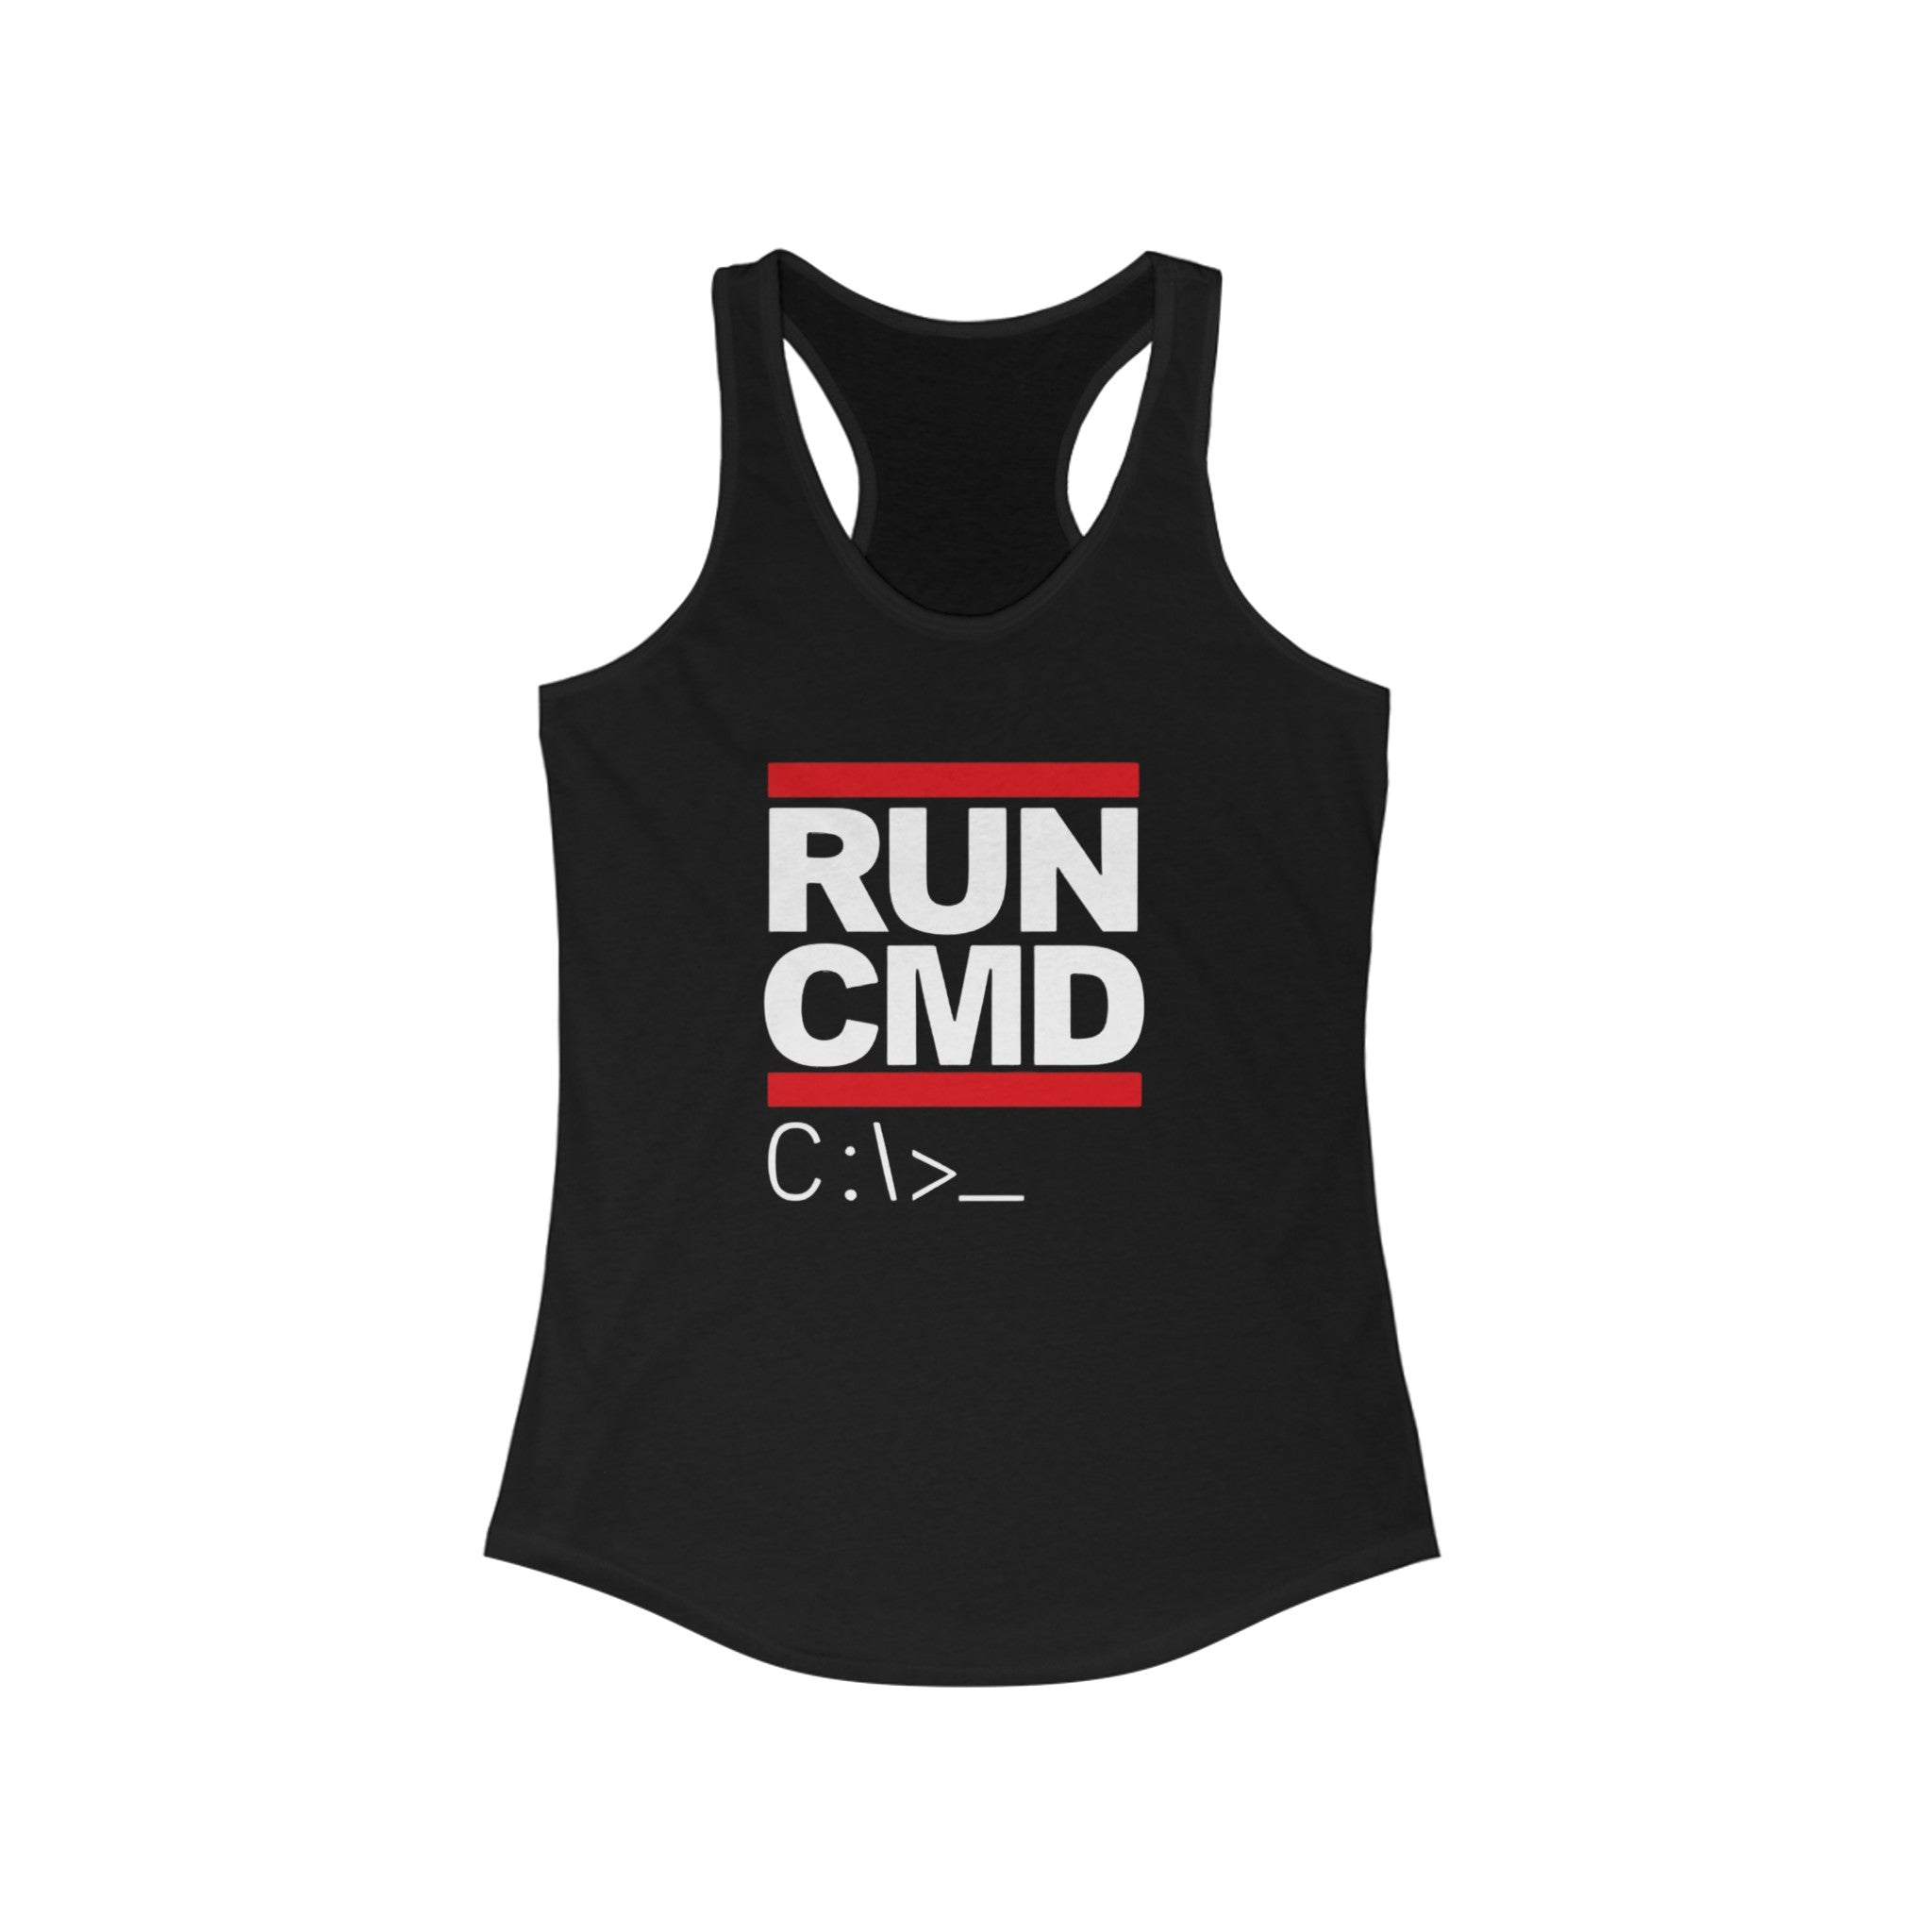 RUN CMD - Women's Racerback Tank